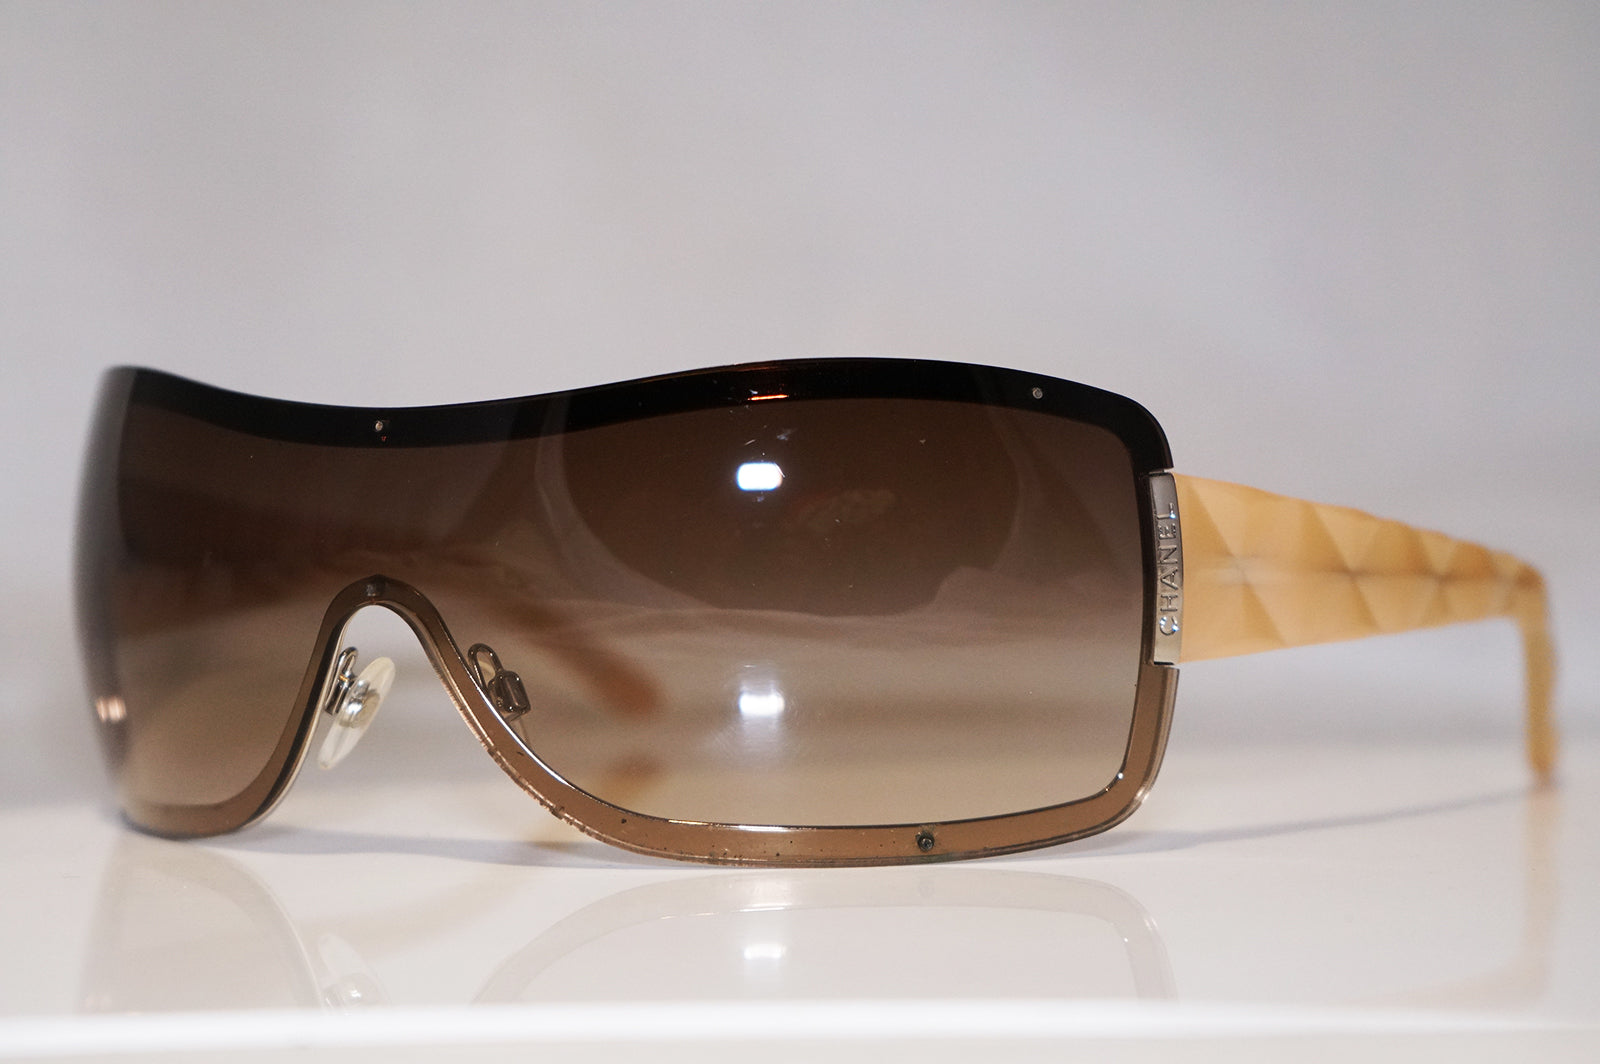 Chanel 4271T C124/13 Sunglasses